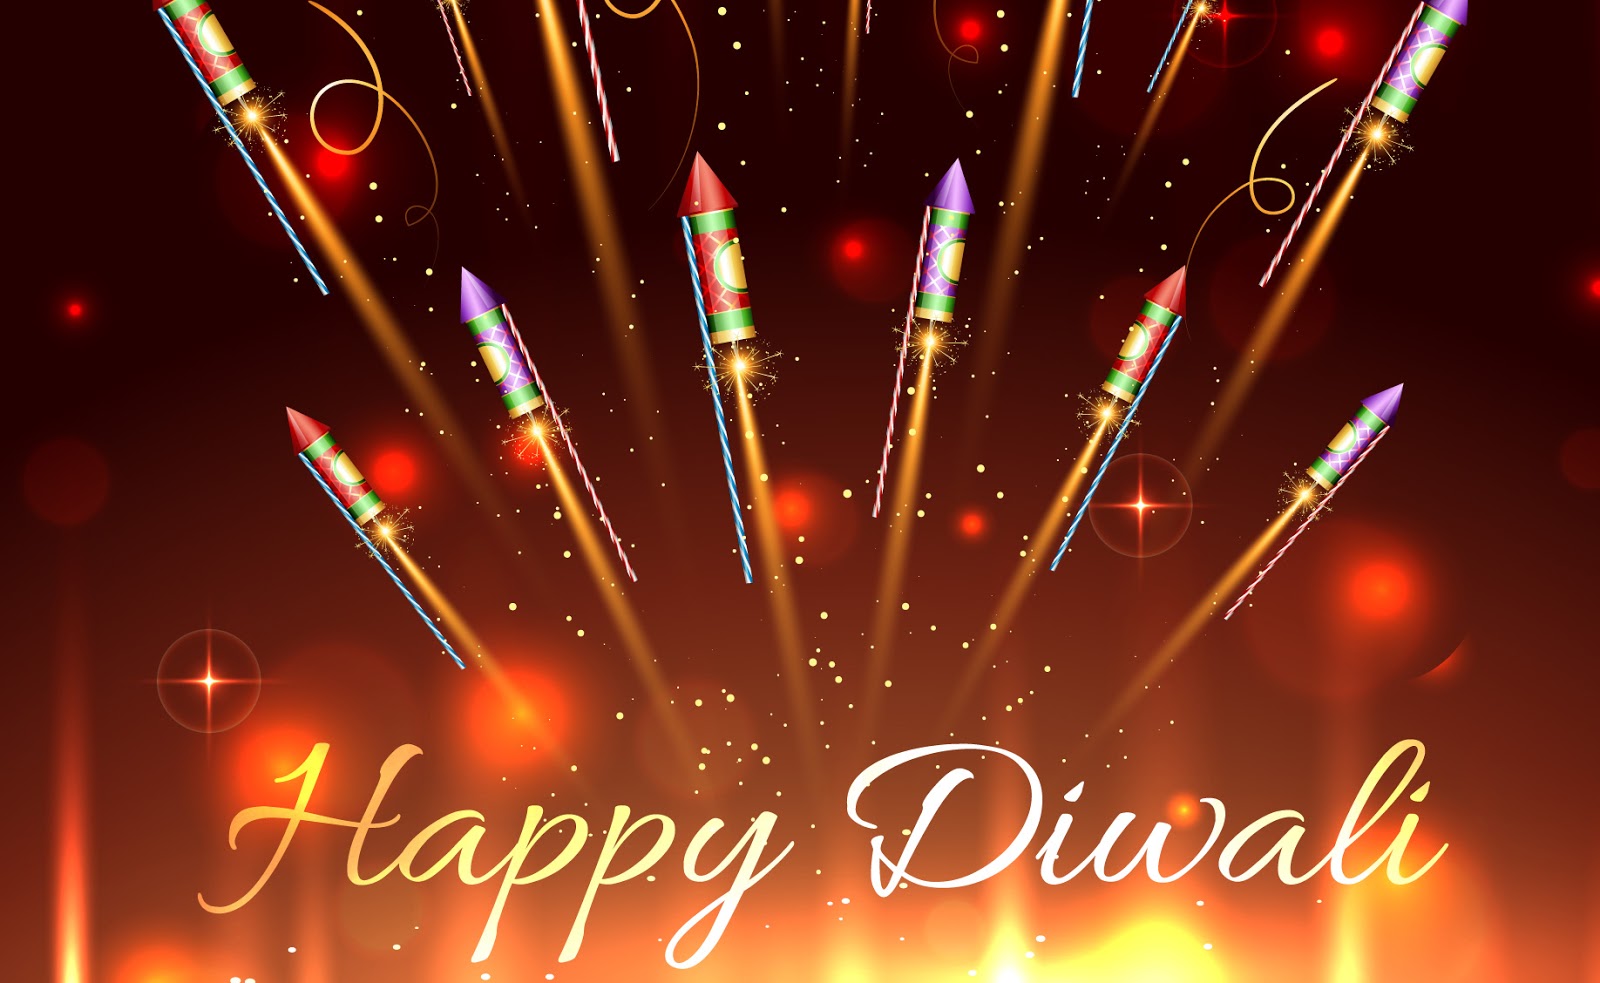 Happy Diwali / Deepavali Images & Pictures For Facebook